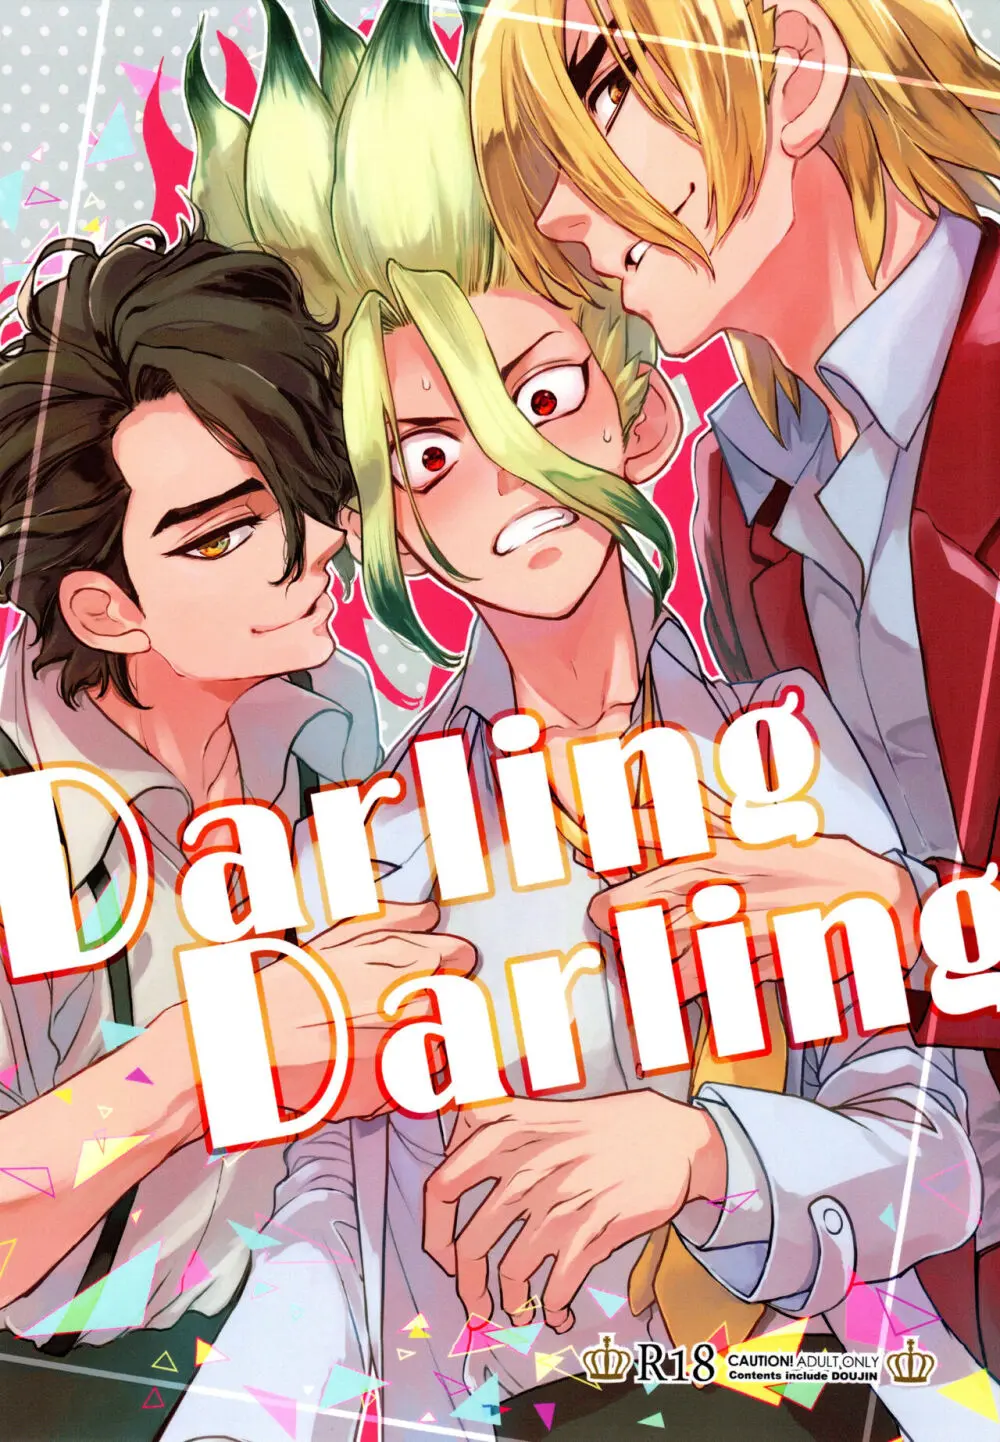 Darling Darling - page1